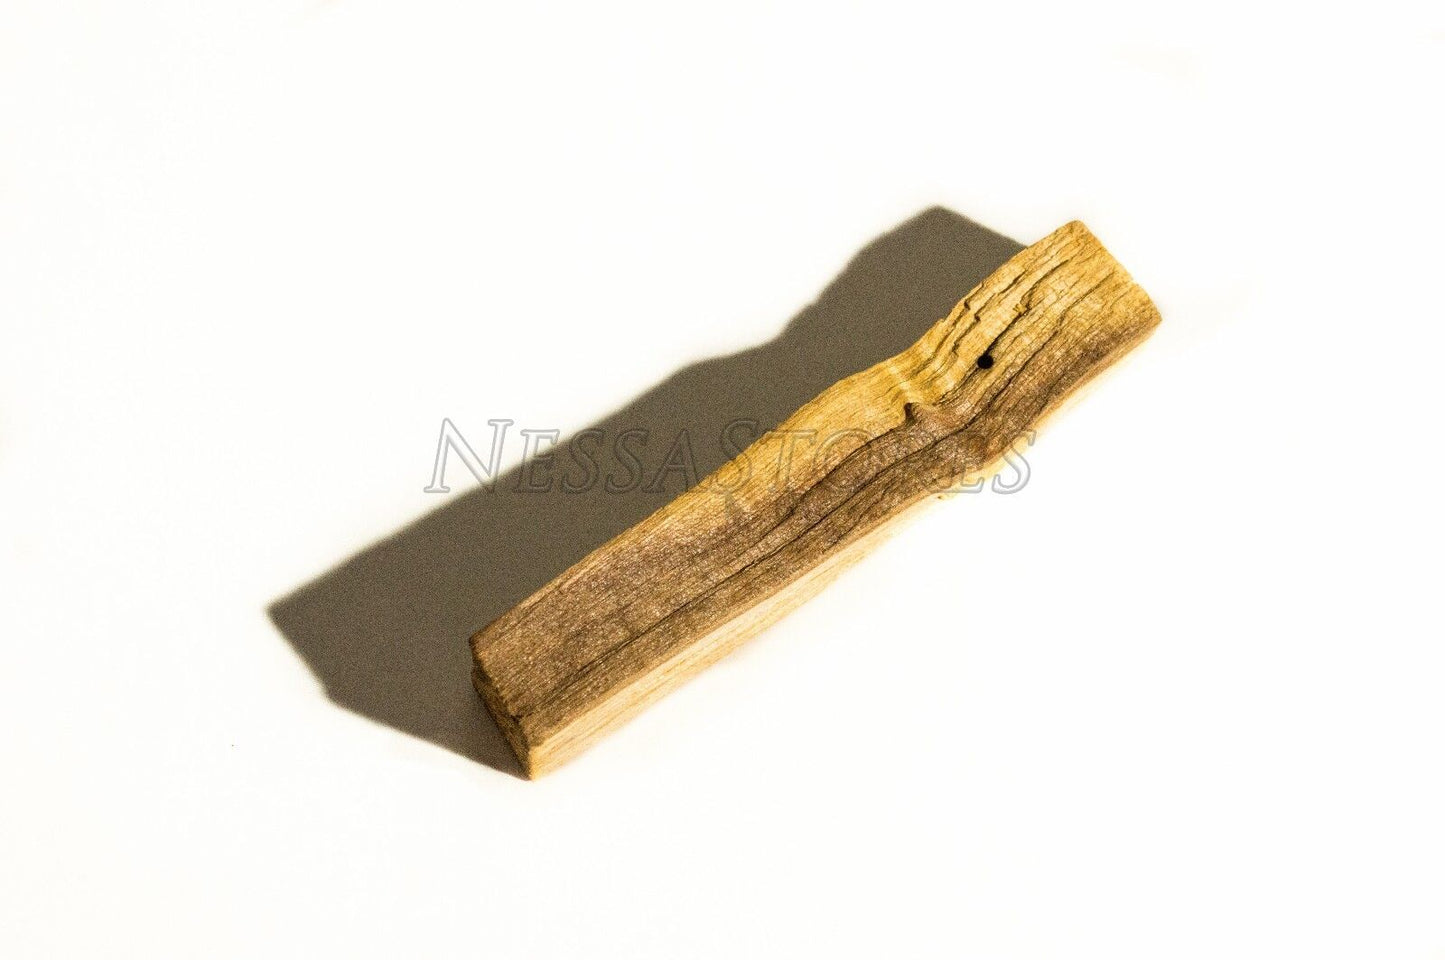 NessaStores Palo Santo Holy Wood Incense Sticks Peruvian (1 lb) #JC-65